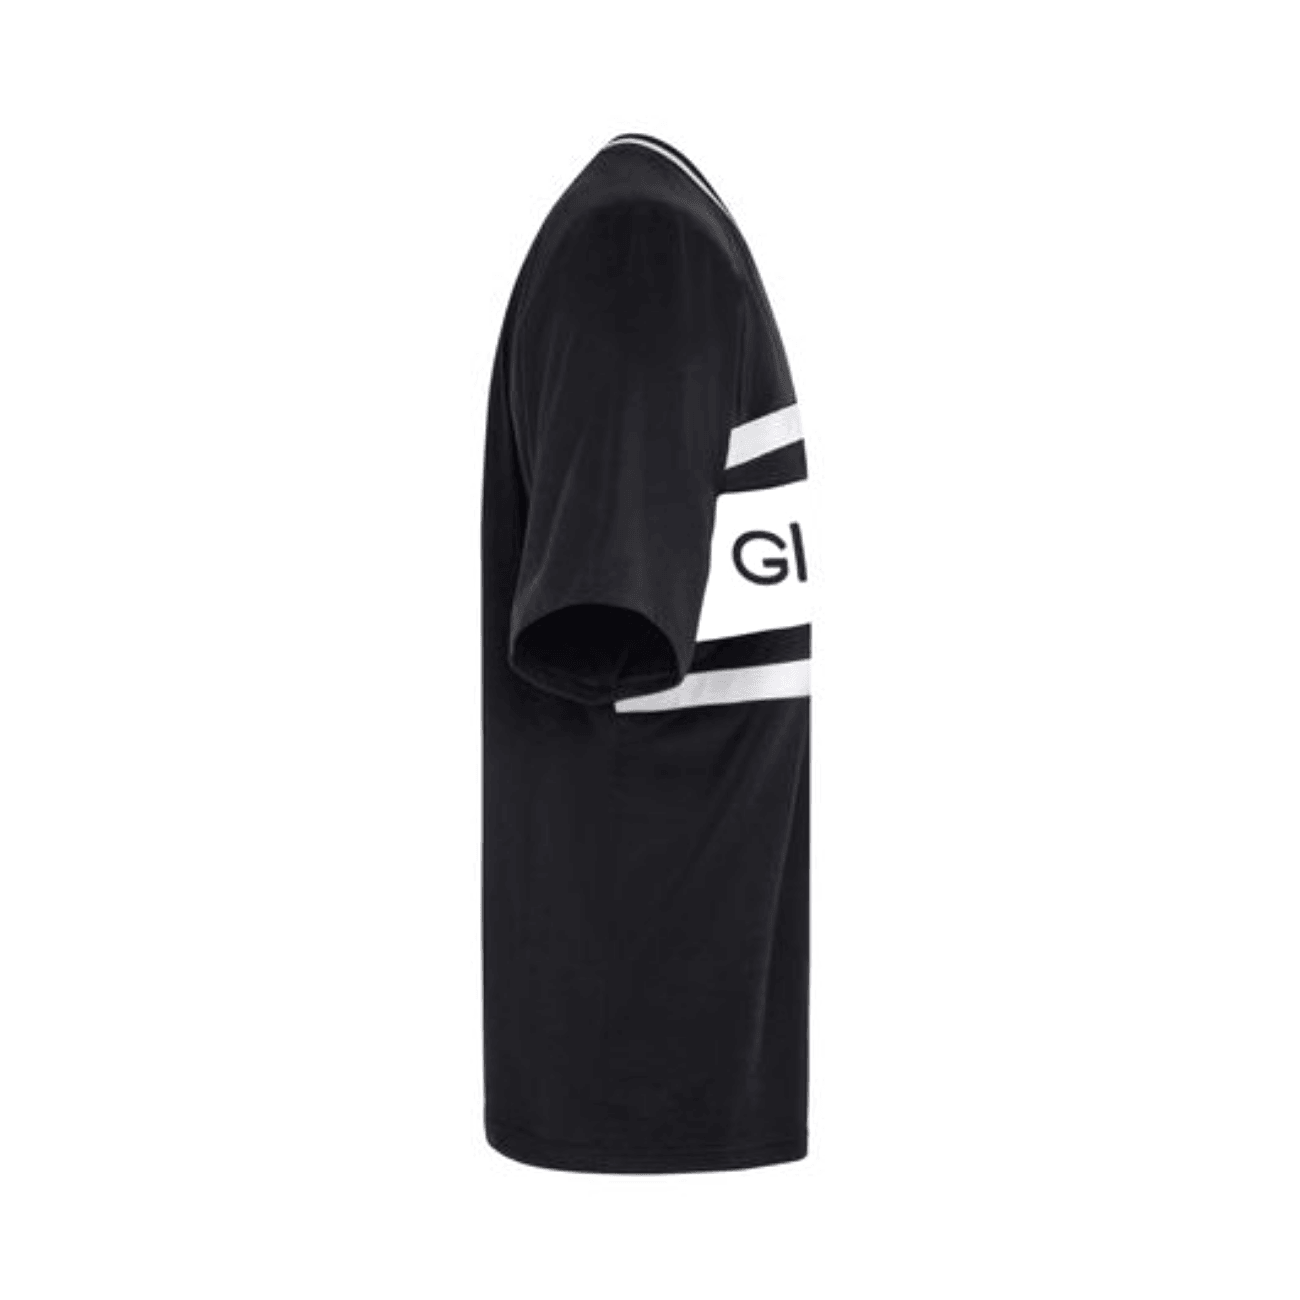 STYLIAN - Givenchy BM70KU3002-001 4G Embroidered Oversized Men's T-Shirt, Black